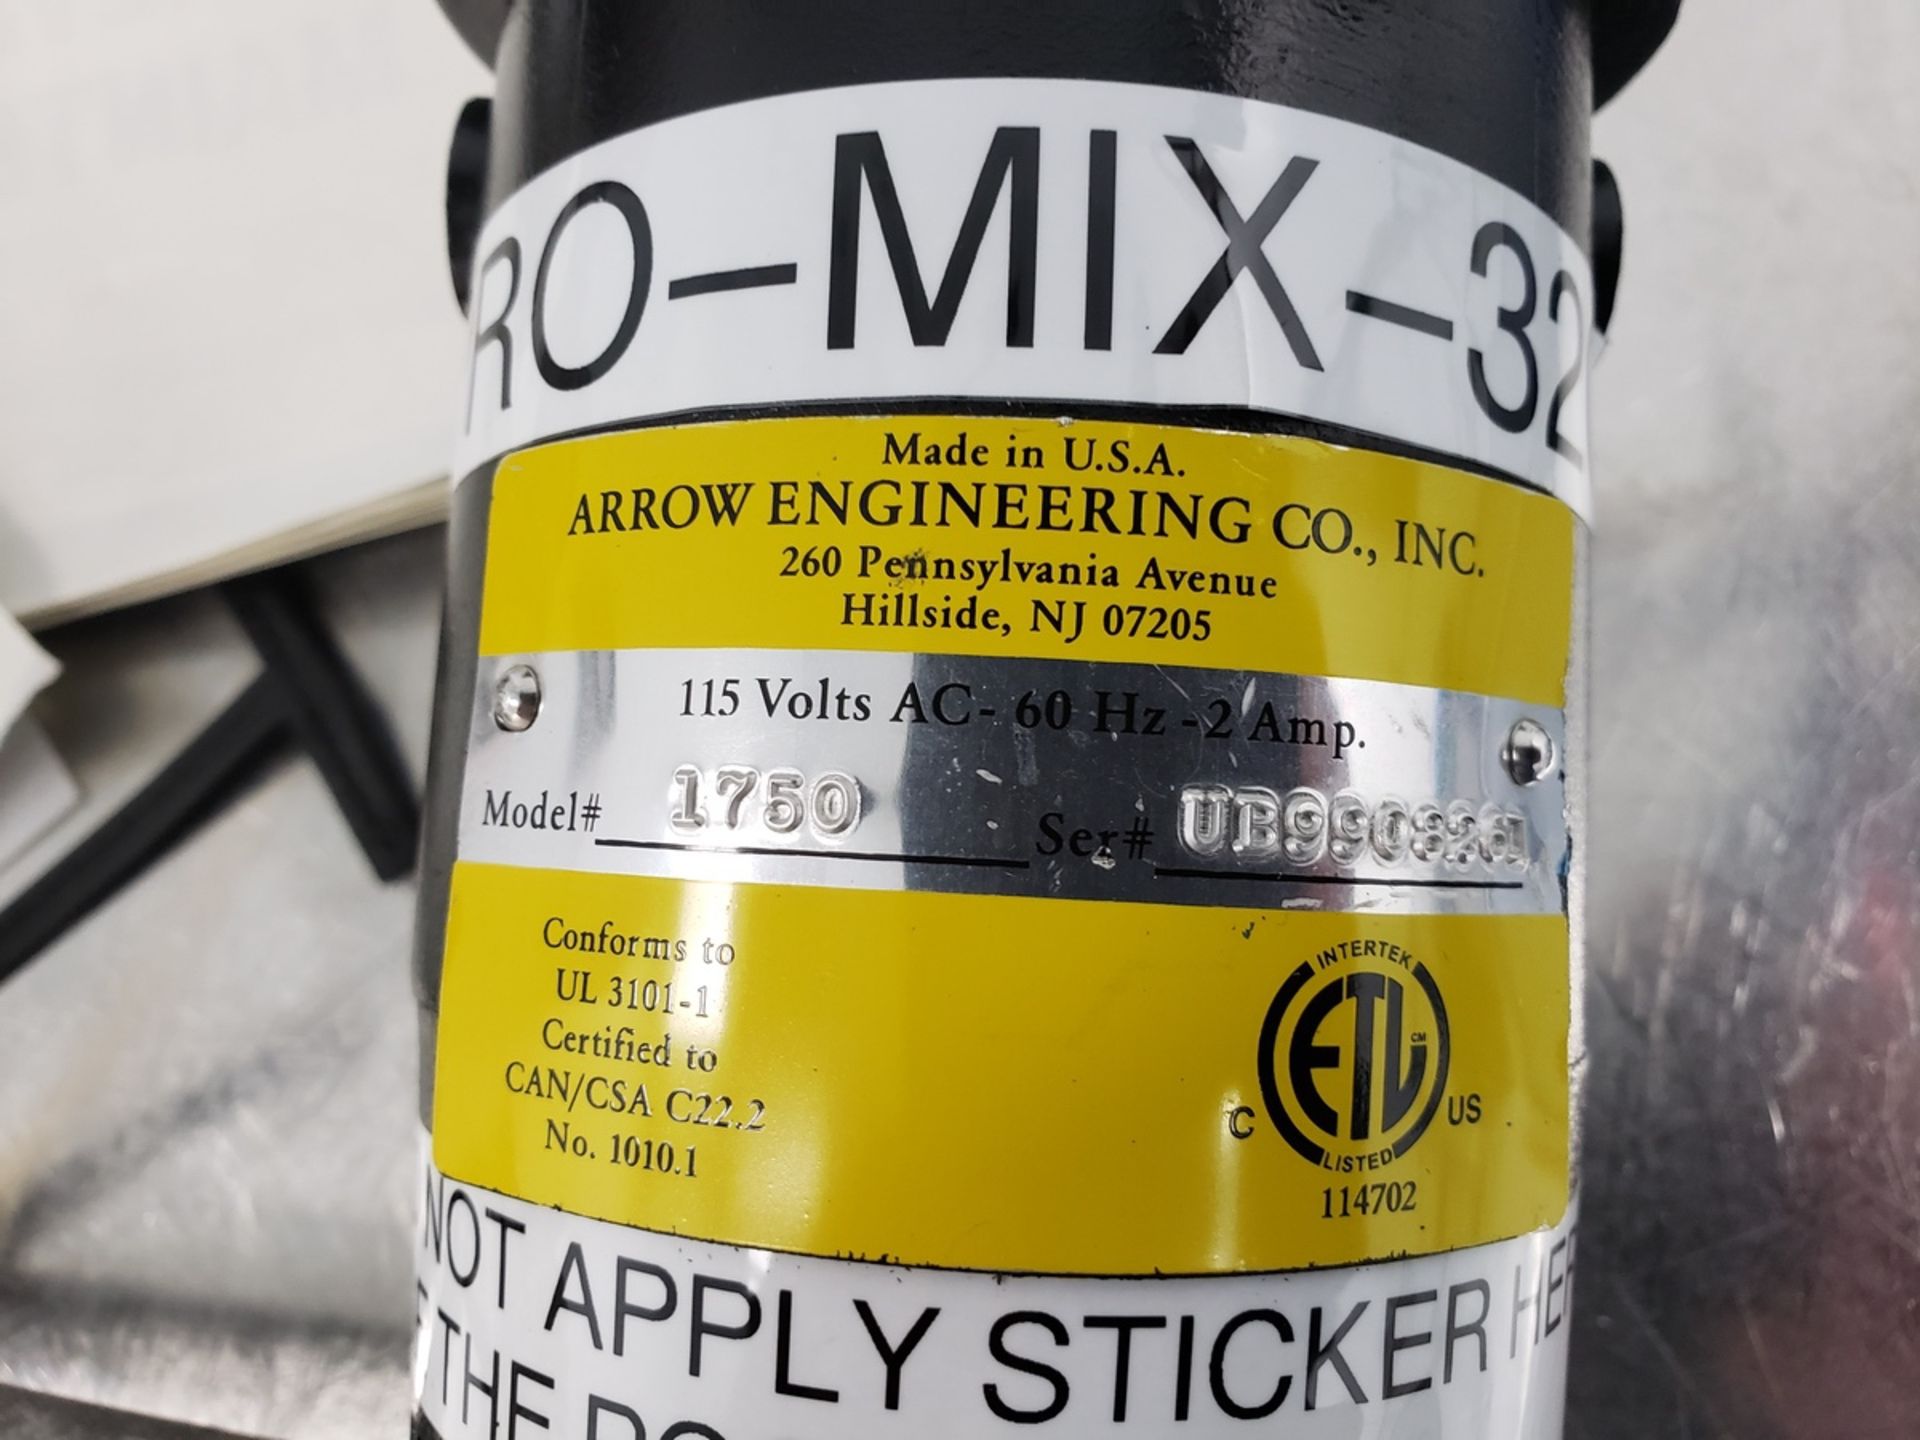 Arrow Engineering Mixer, M# 1750, S/N UB9908261 | Rig Fee $50 - Image 2 of 2